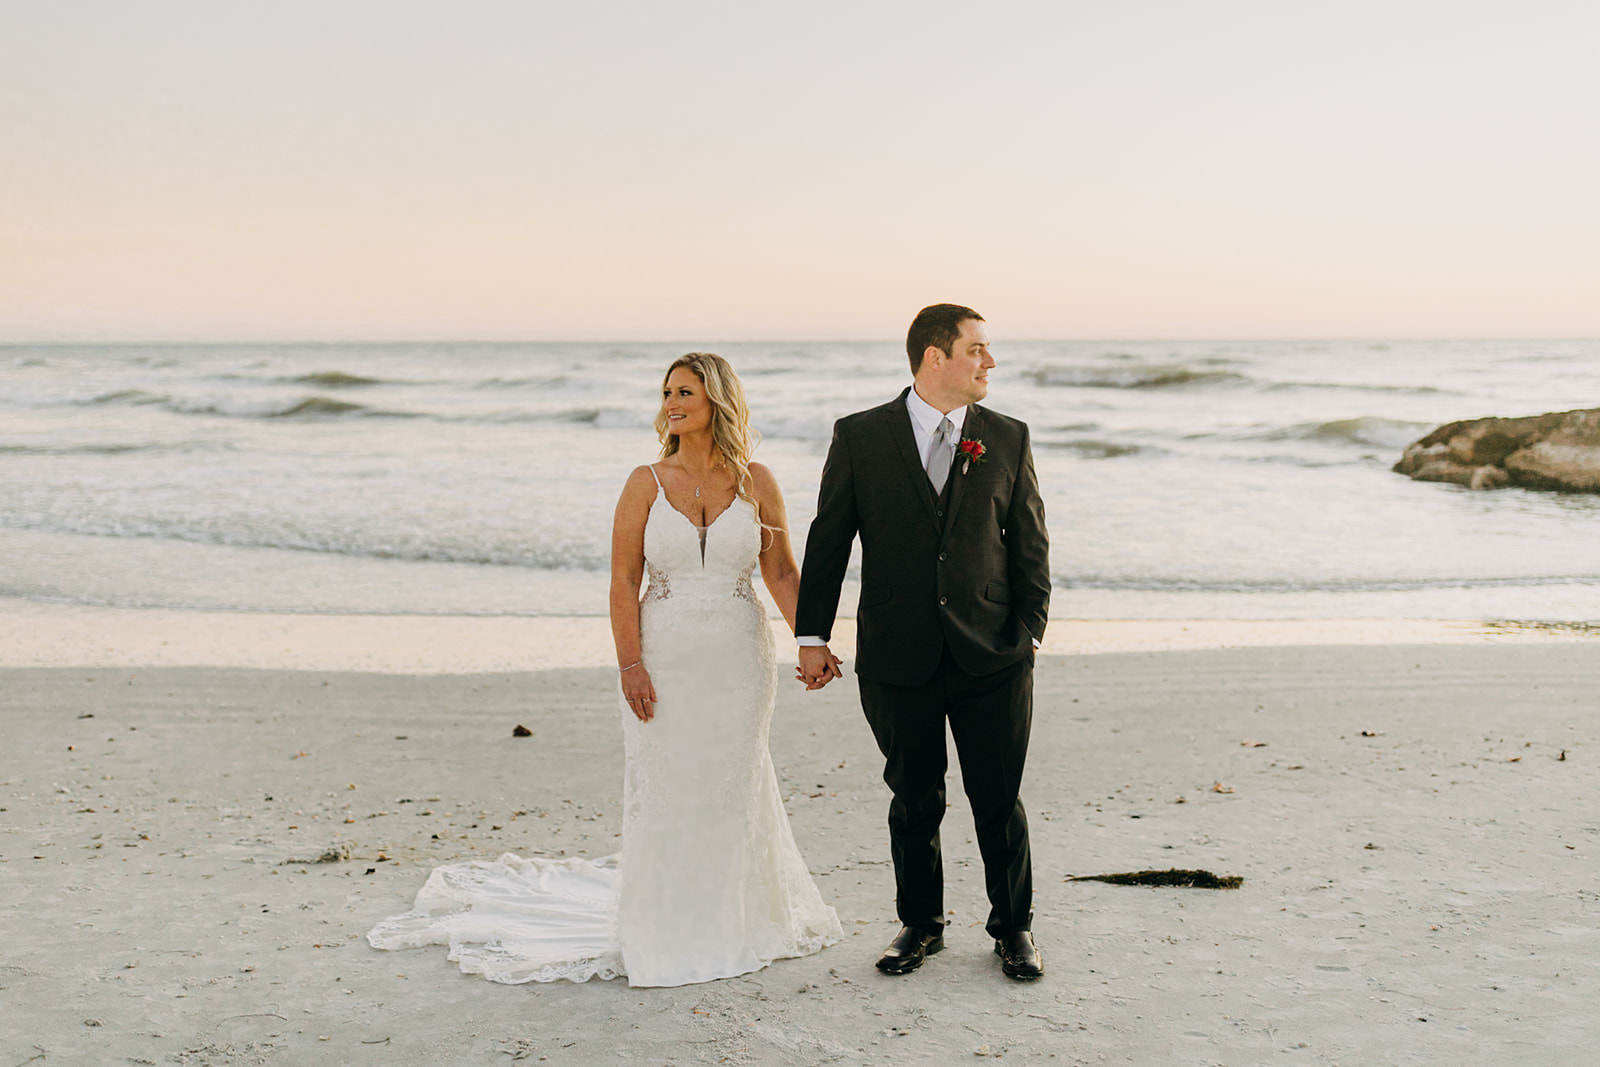 Bride and Groom on the Beach Wedding Portrait | St. Petersburg Wedding Photographer Amber McWhorter Photography